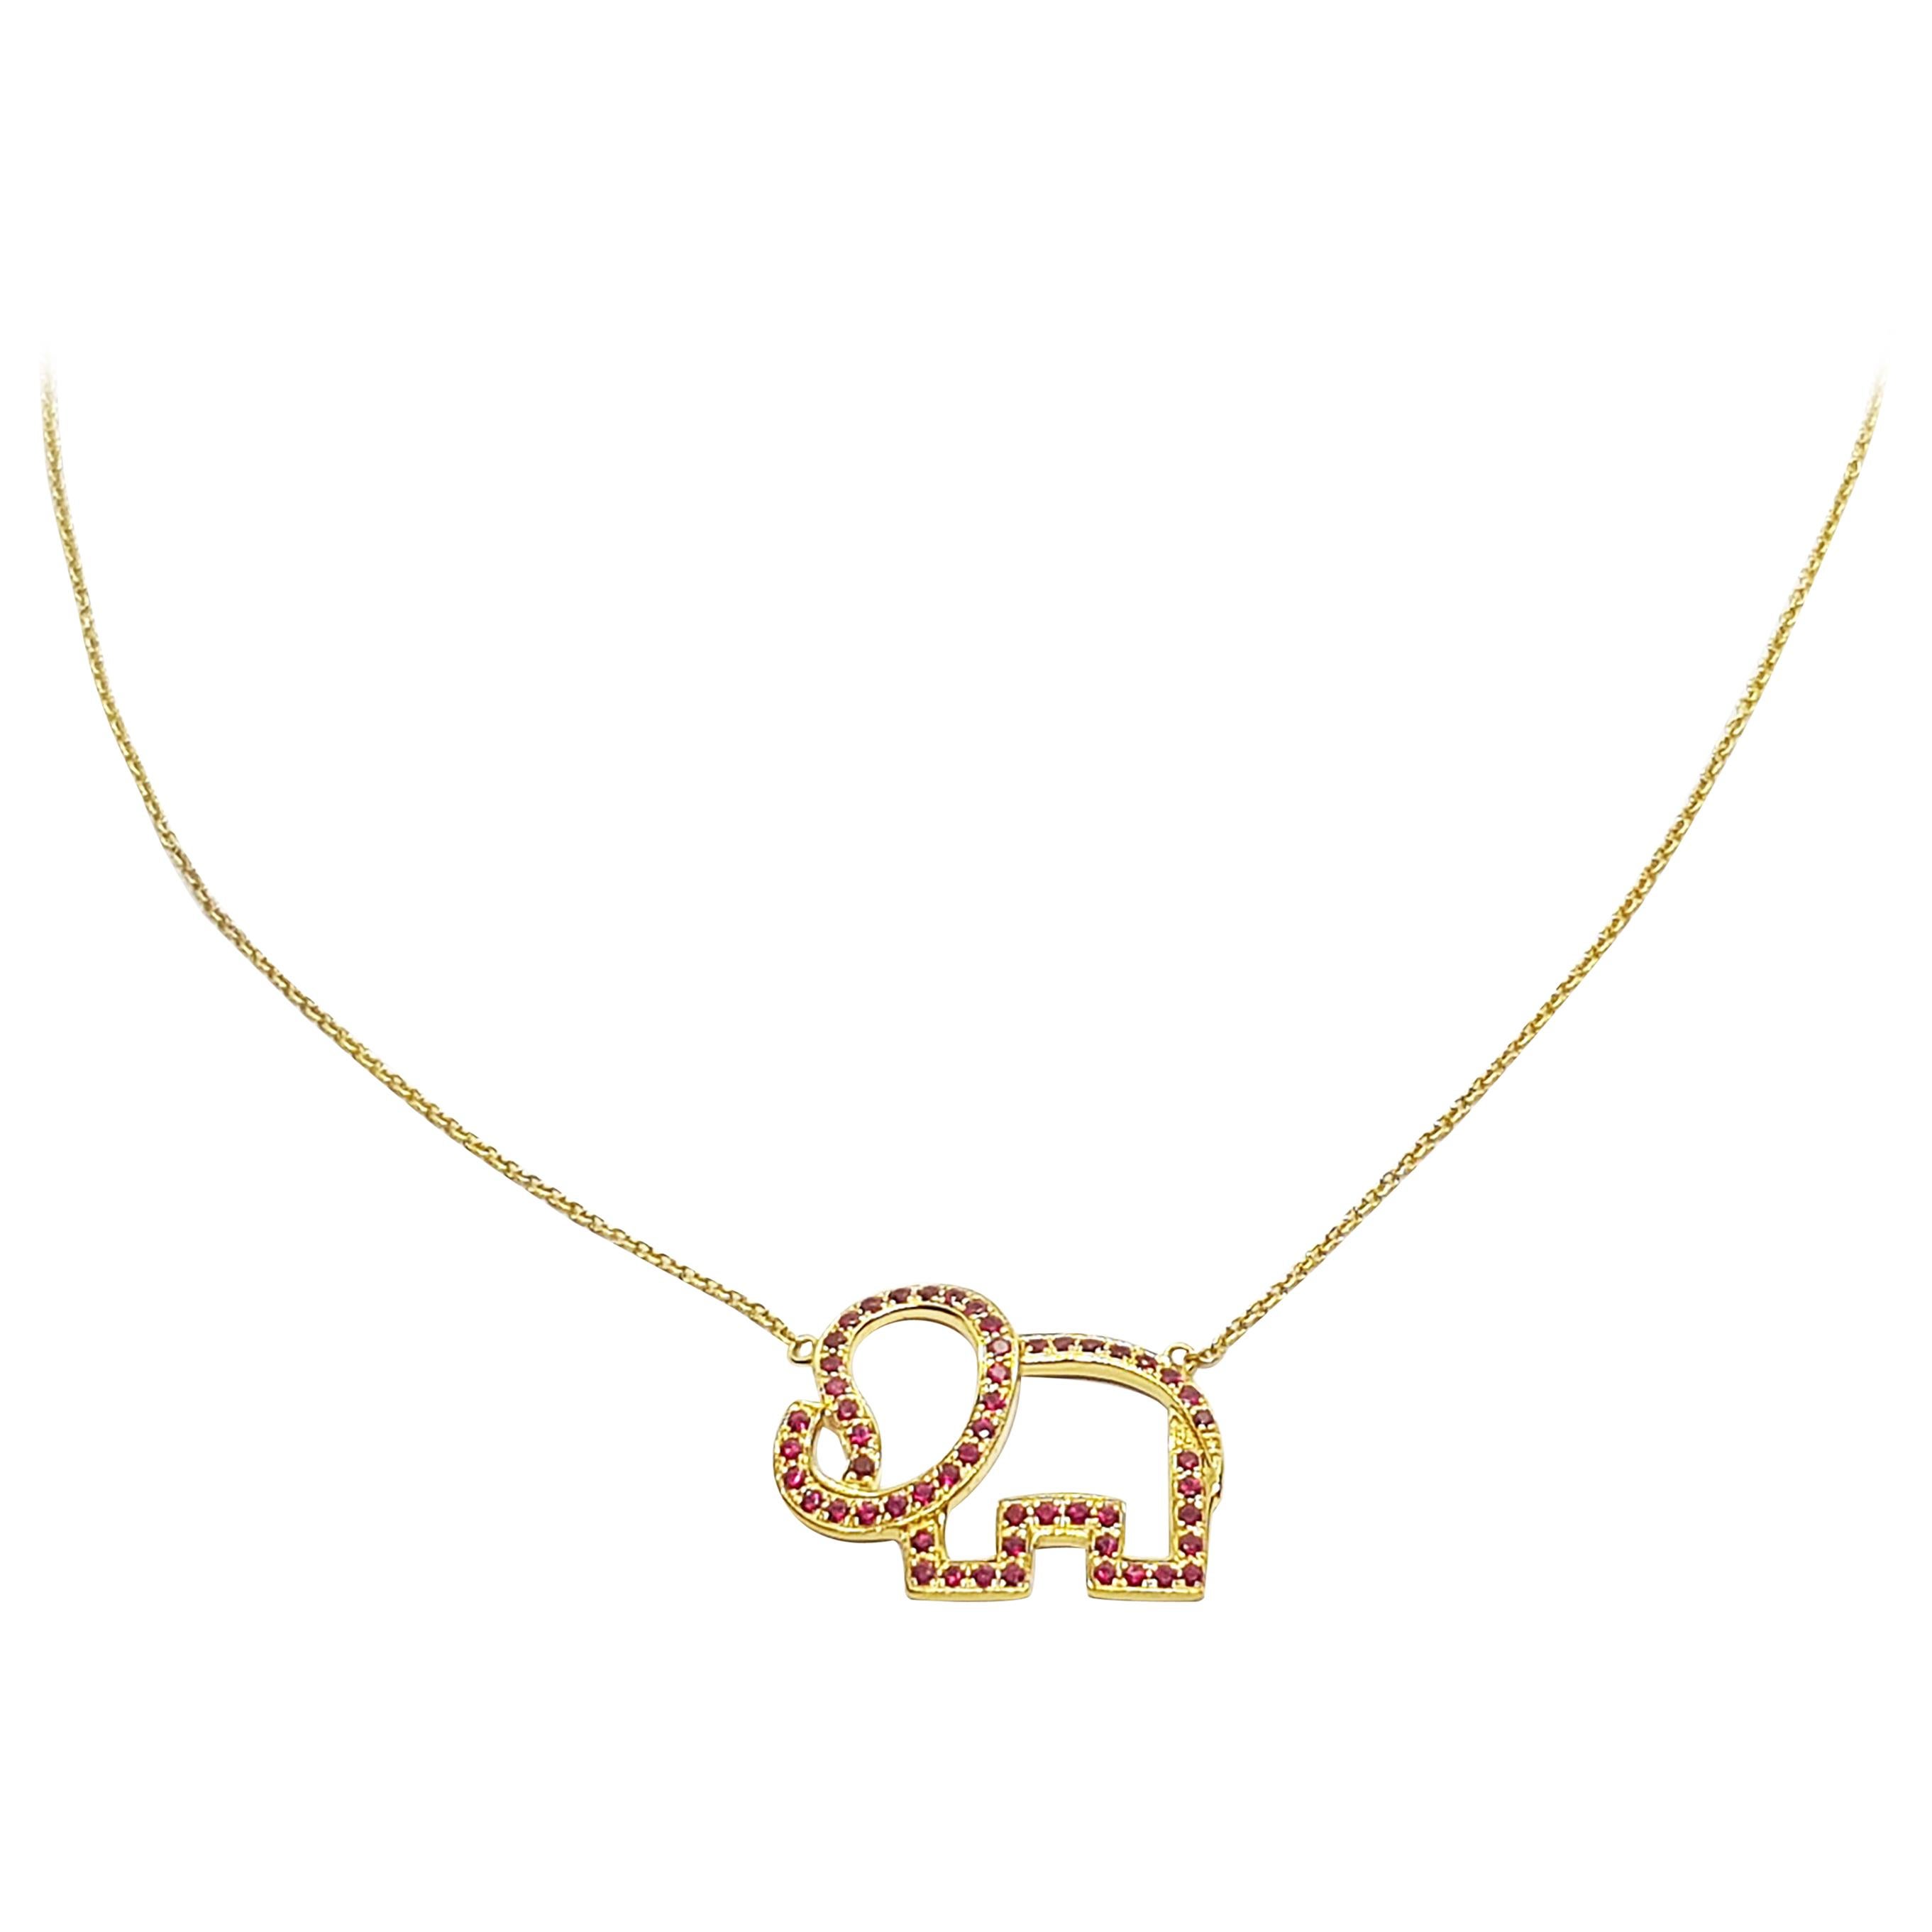 Ruby Elephant Necklace Set in 18 Karat Gold Settings